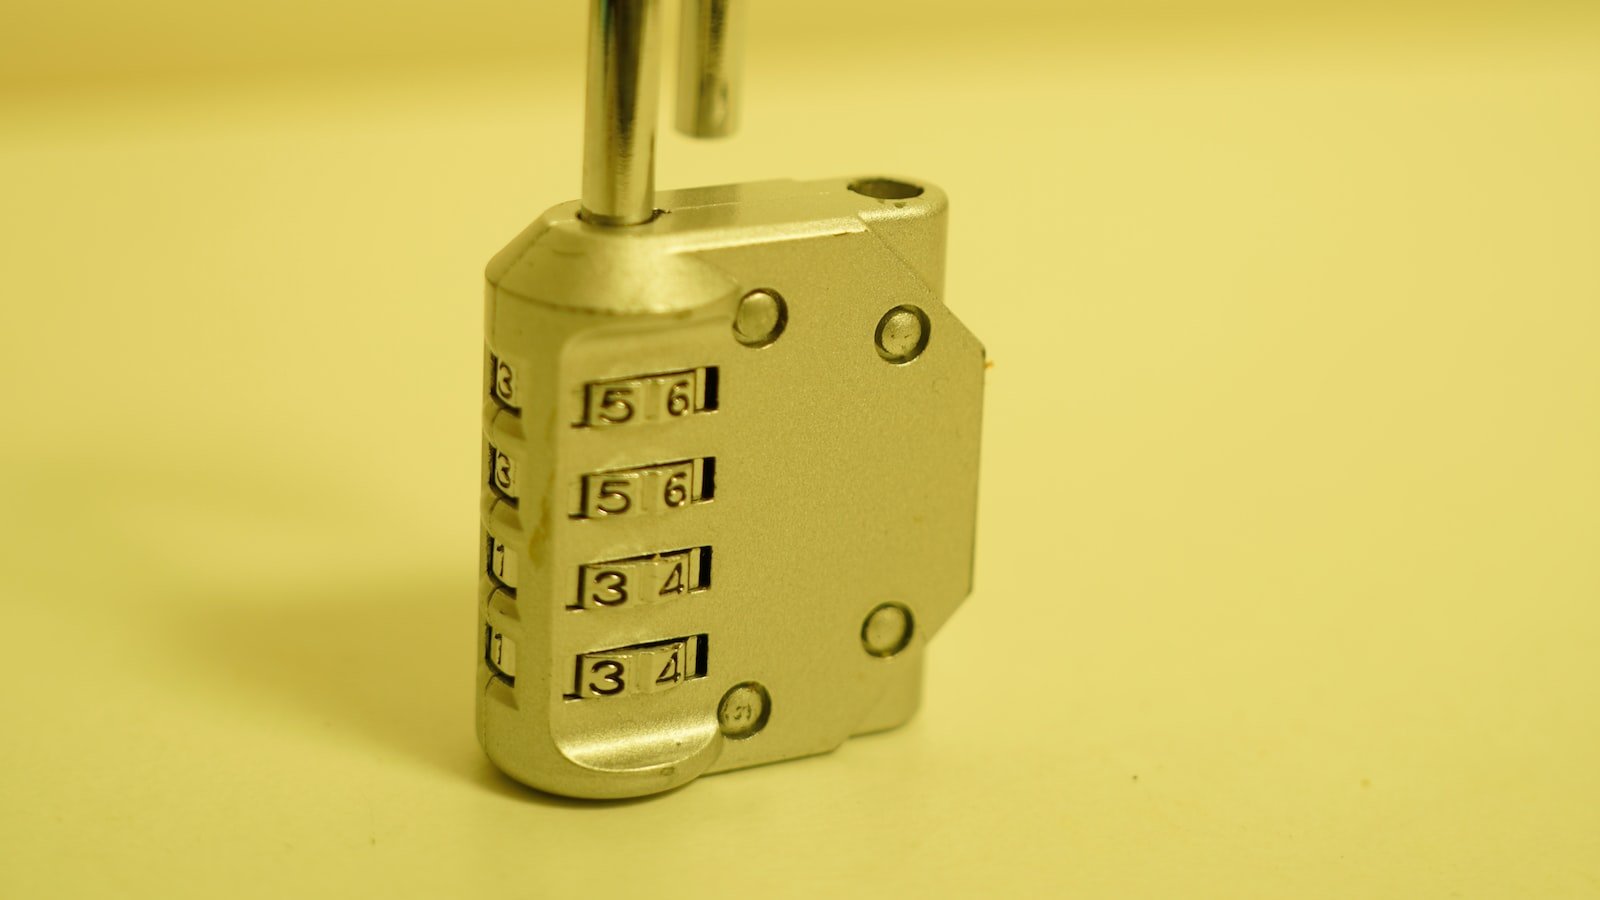 Locksmiths vs. Lockpickers: Who’s Better at Problem-Solving?